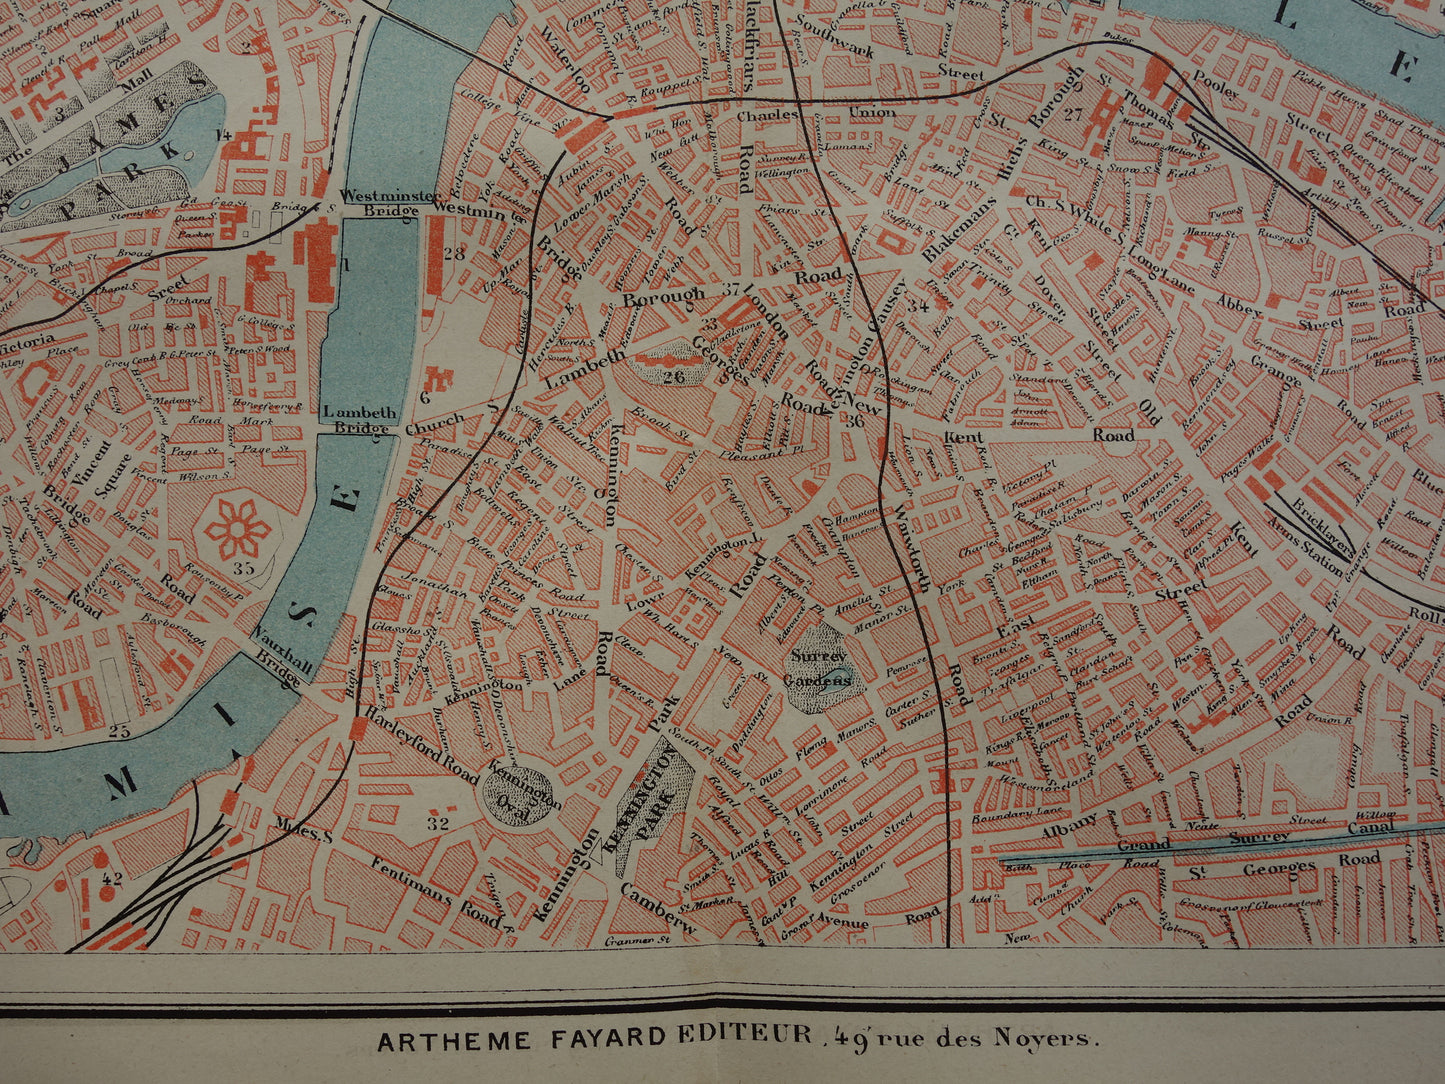 LONDEN oude kaart van Londen Engeland uit 1877 originele antieke Franse plattegrond London